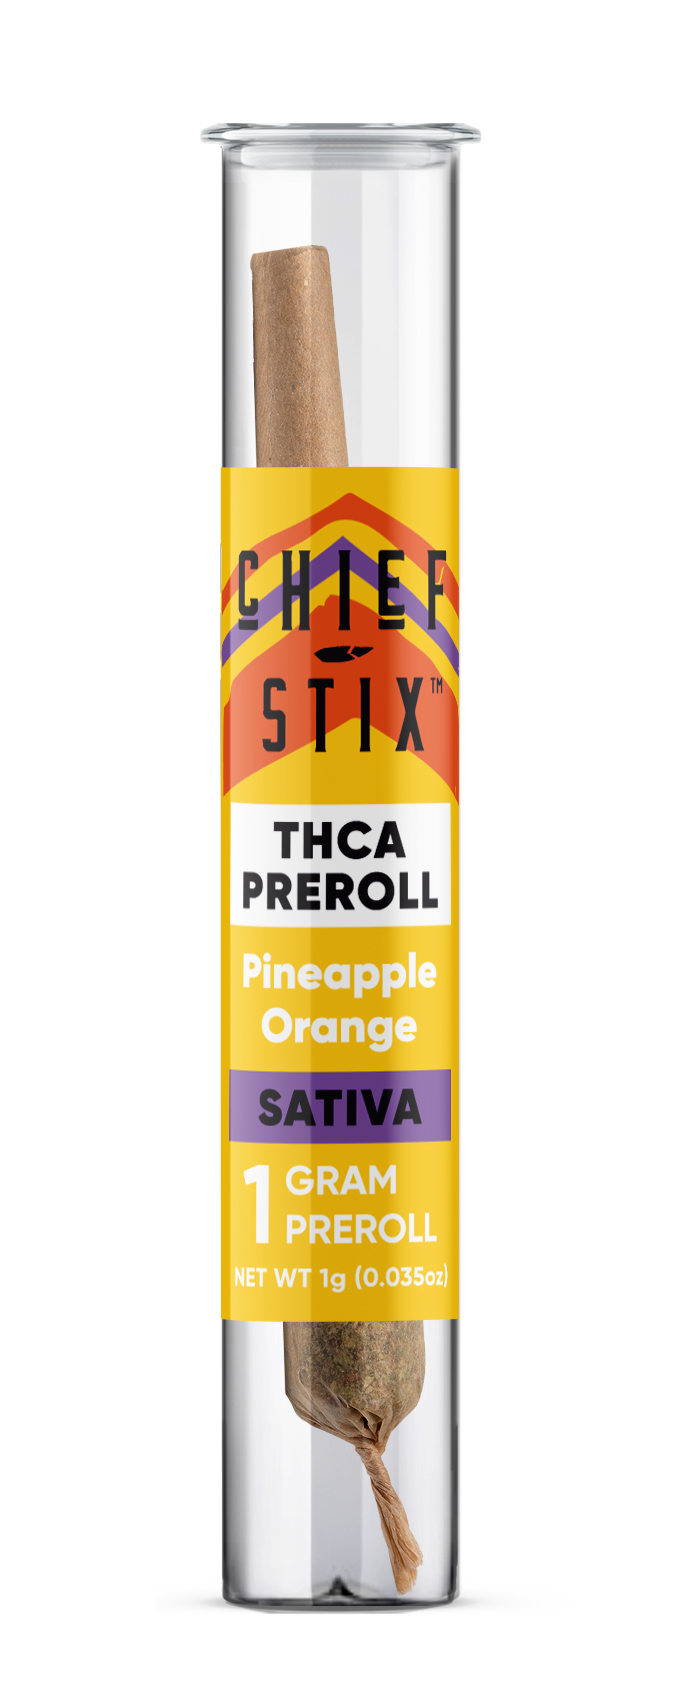 Chief Stix THCA 1 gram Preroll - Sativa - Pineapple Orange